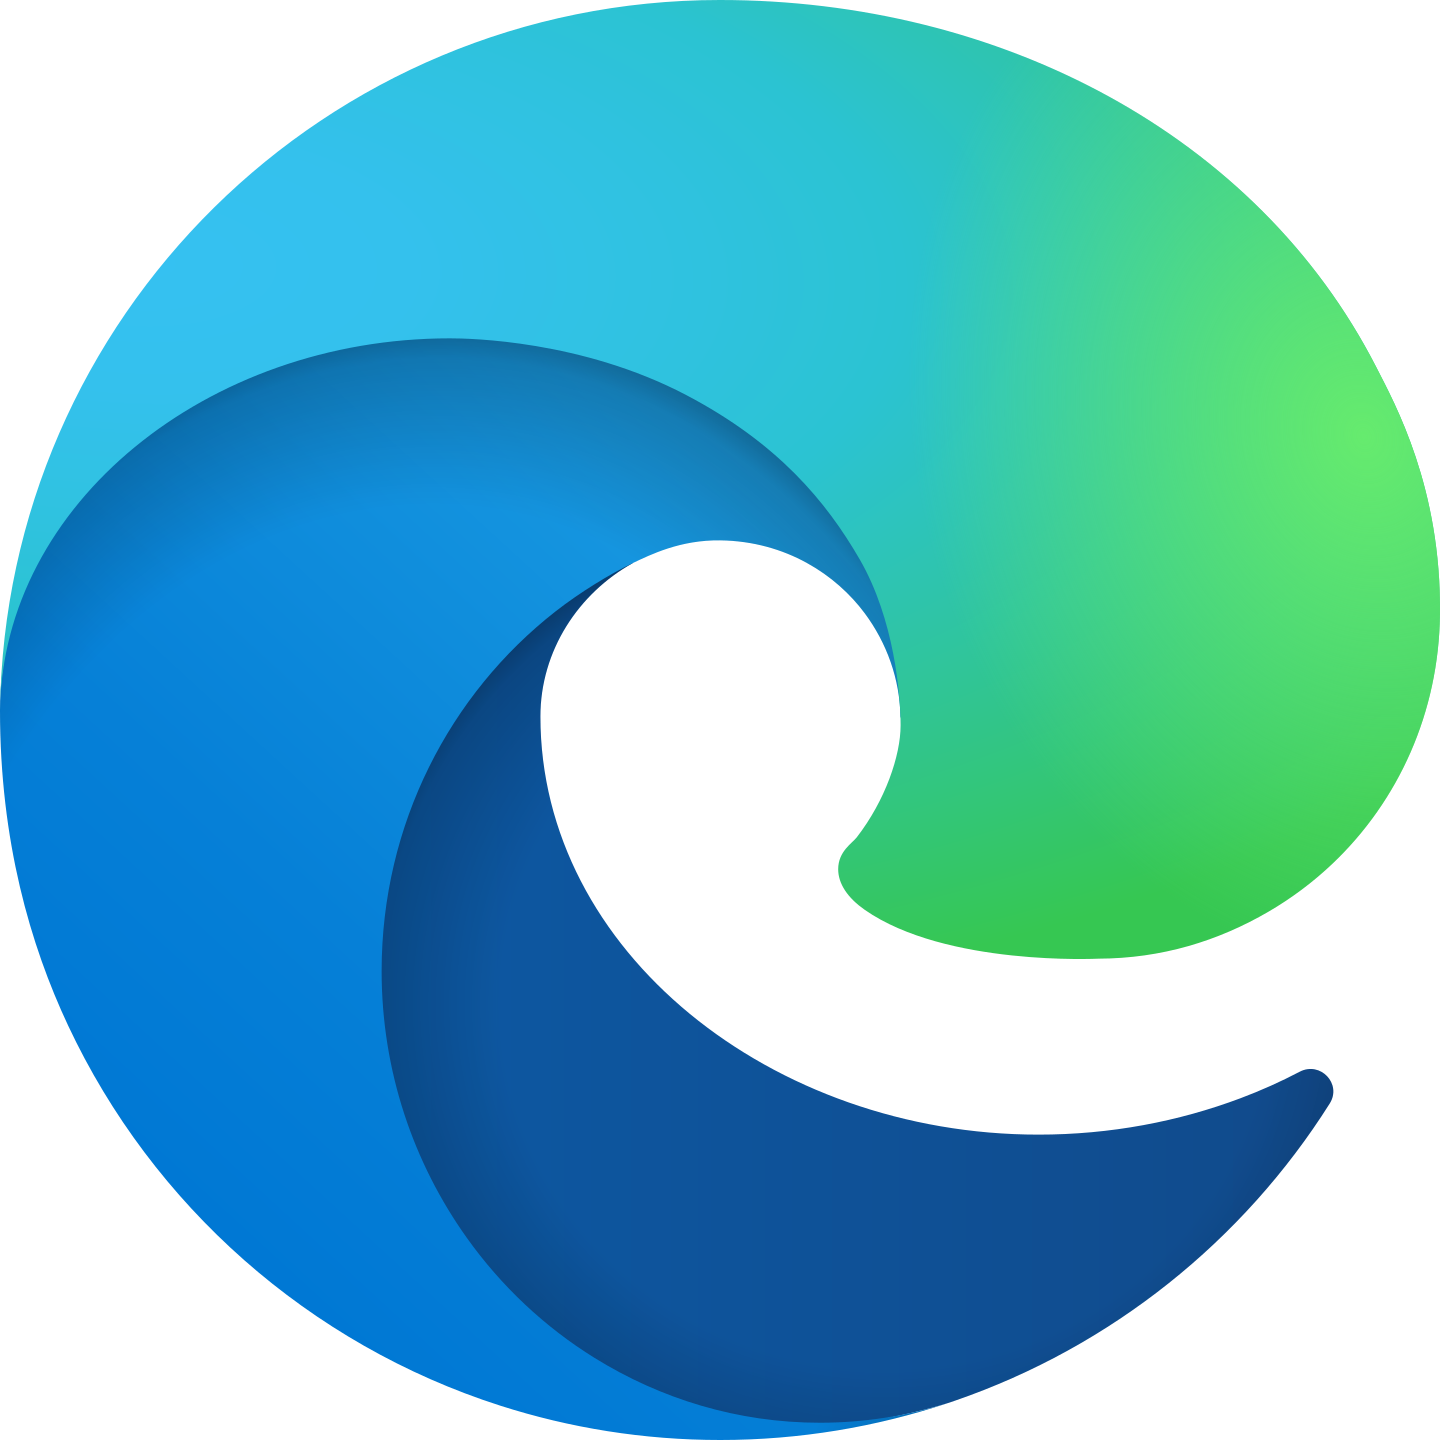 microsoft edge logo 2 1 - Microsoft Edge Logo